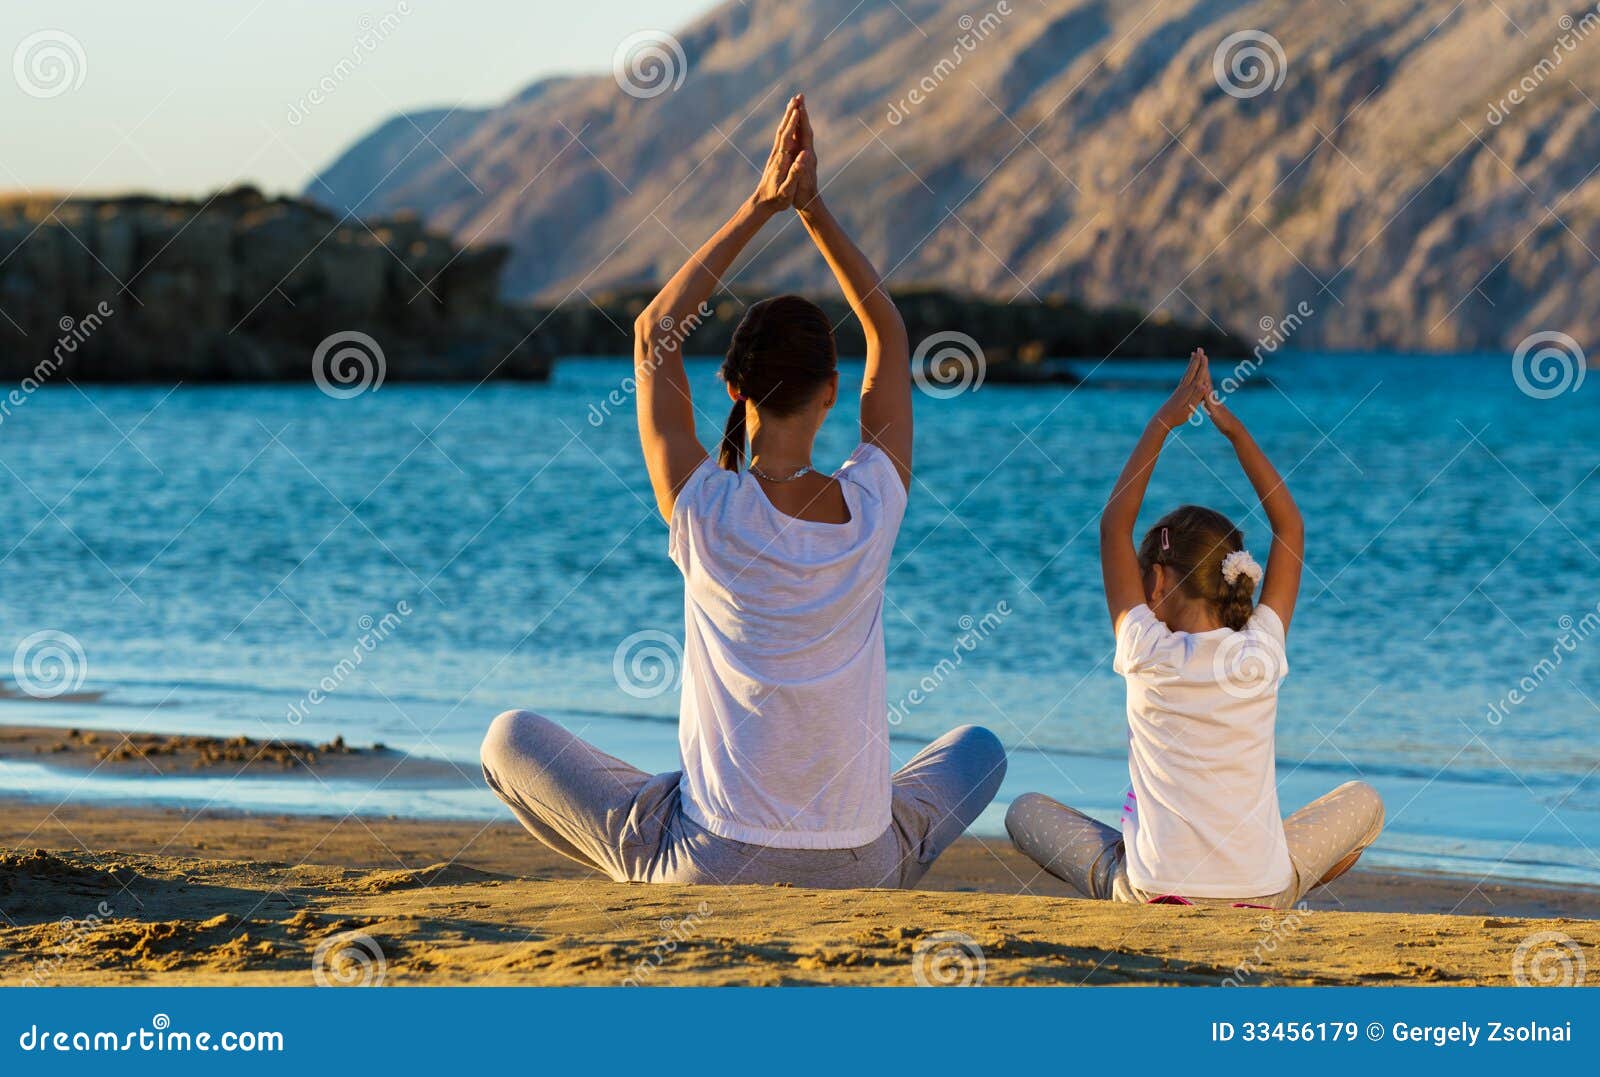 https://thumbs.dreamstime.com/z/mother-daughter-doing-yoga-exercise-beach-island-rab-33456179.jpg